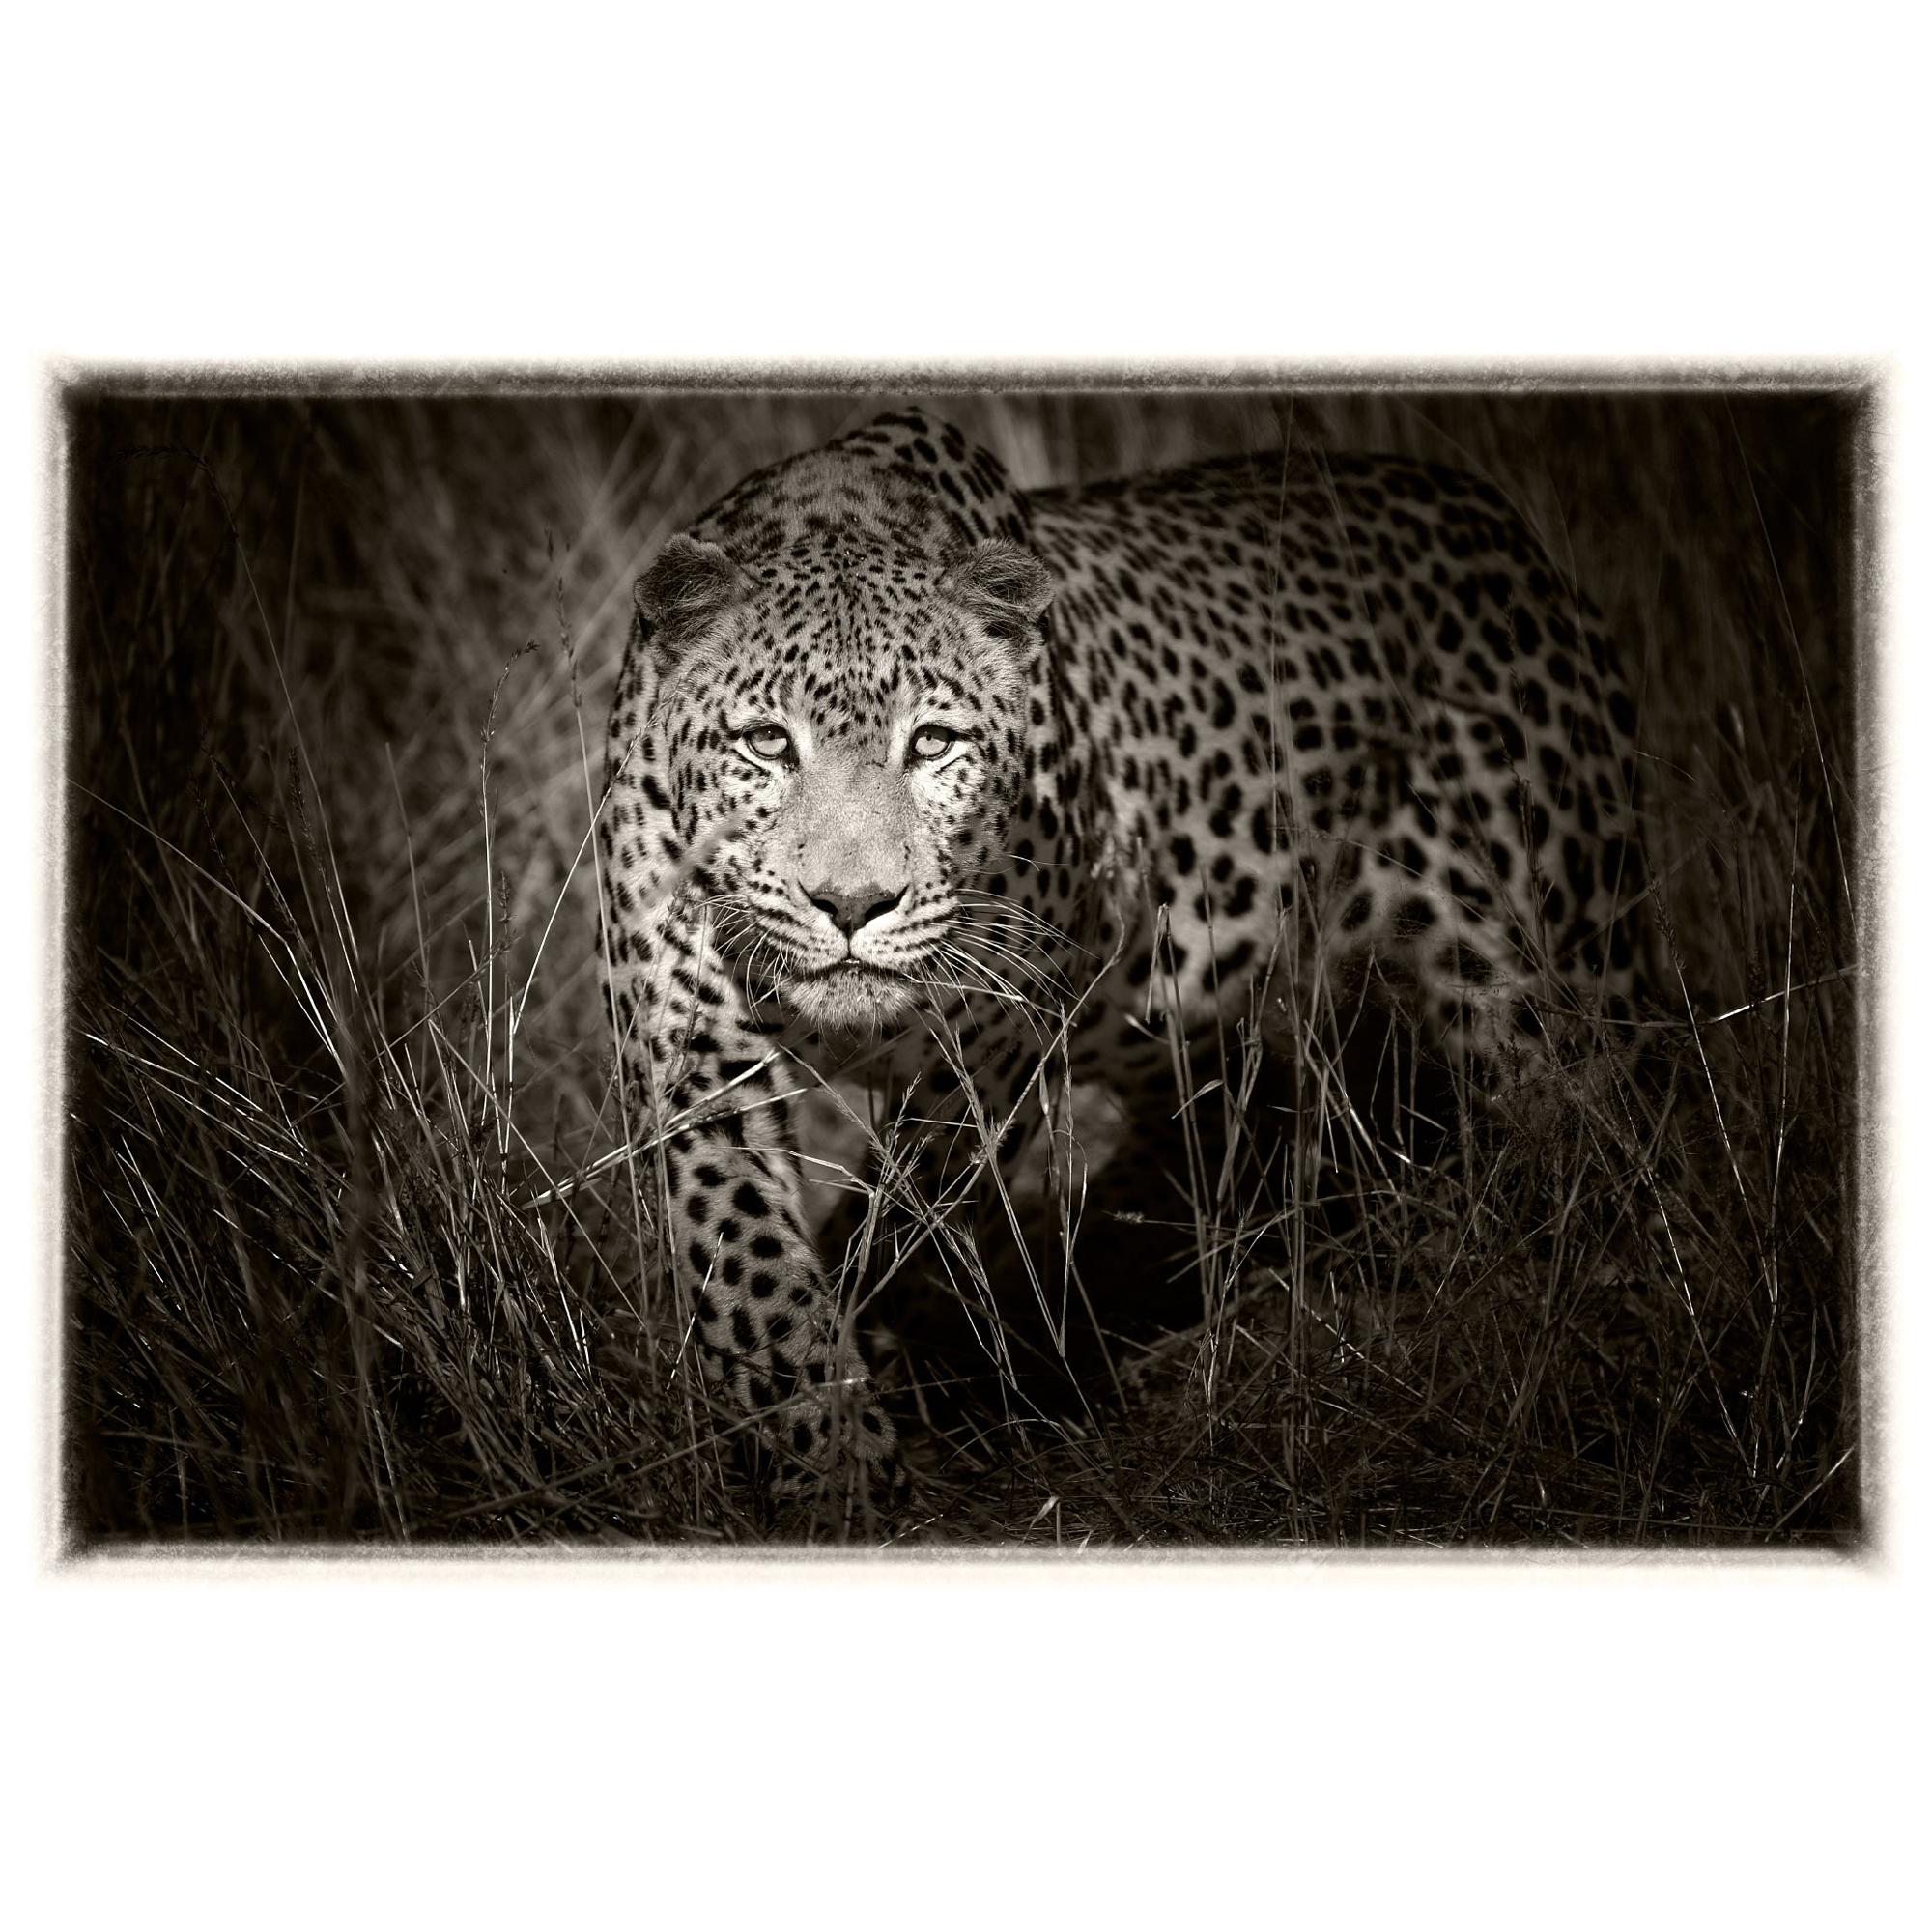 Etosha Leopard II, Black and White Photography, Fine Art Print by Rainer Martini